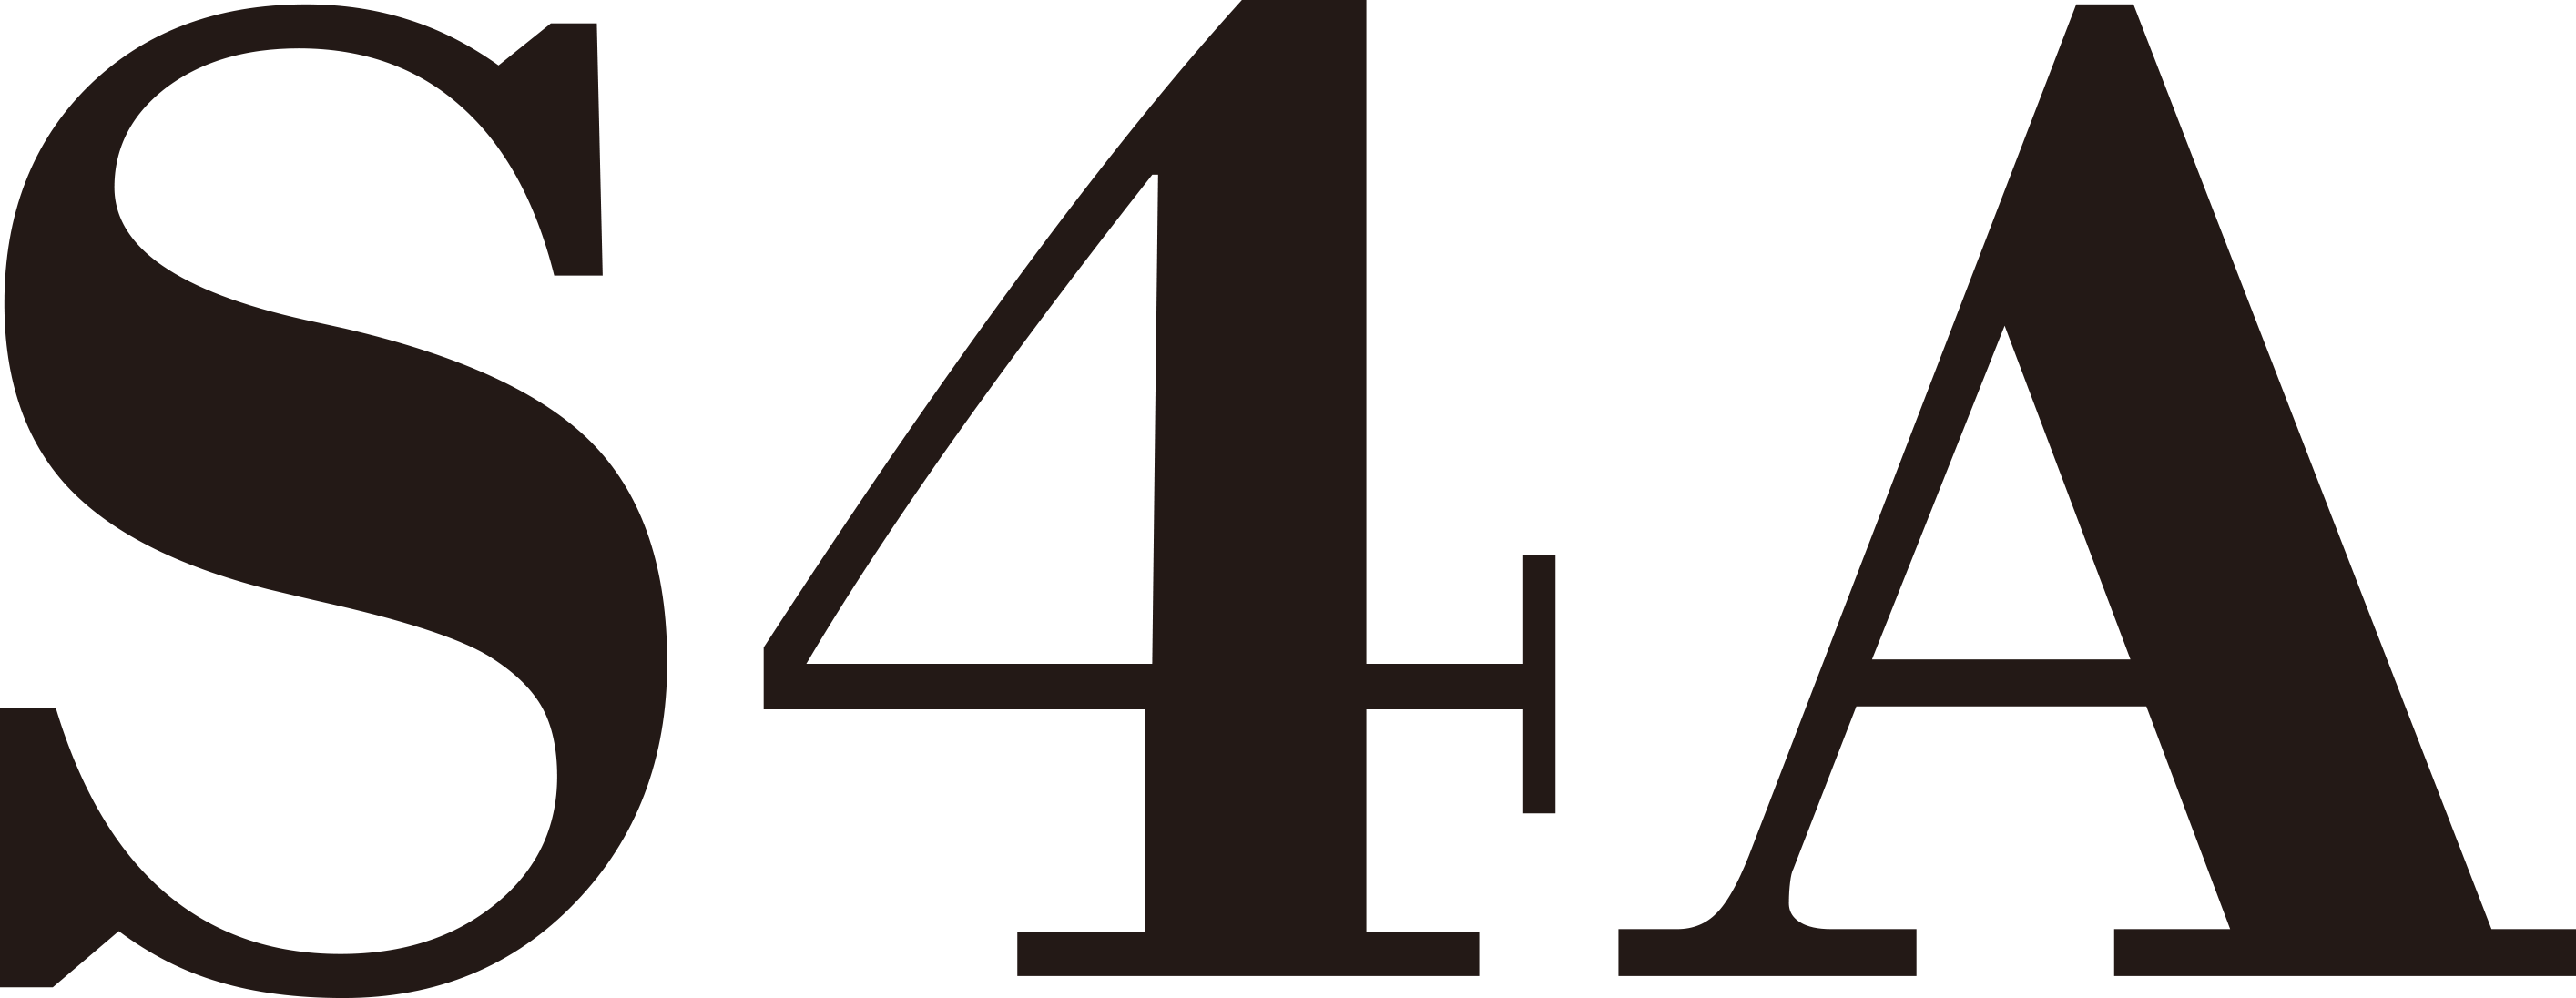 شعار S4A.png